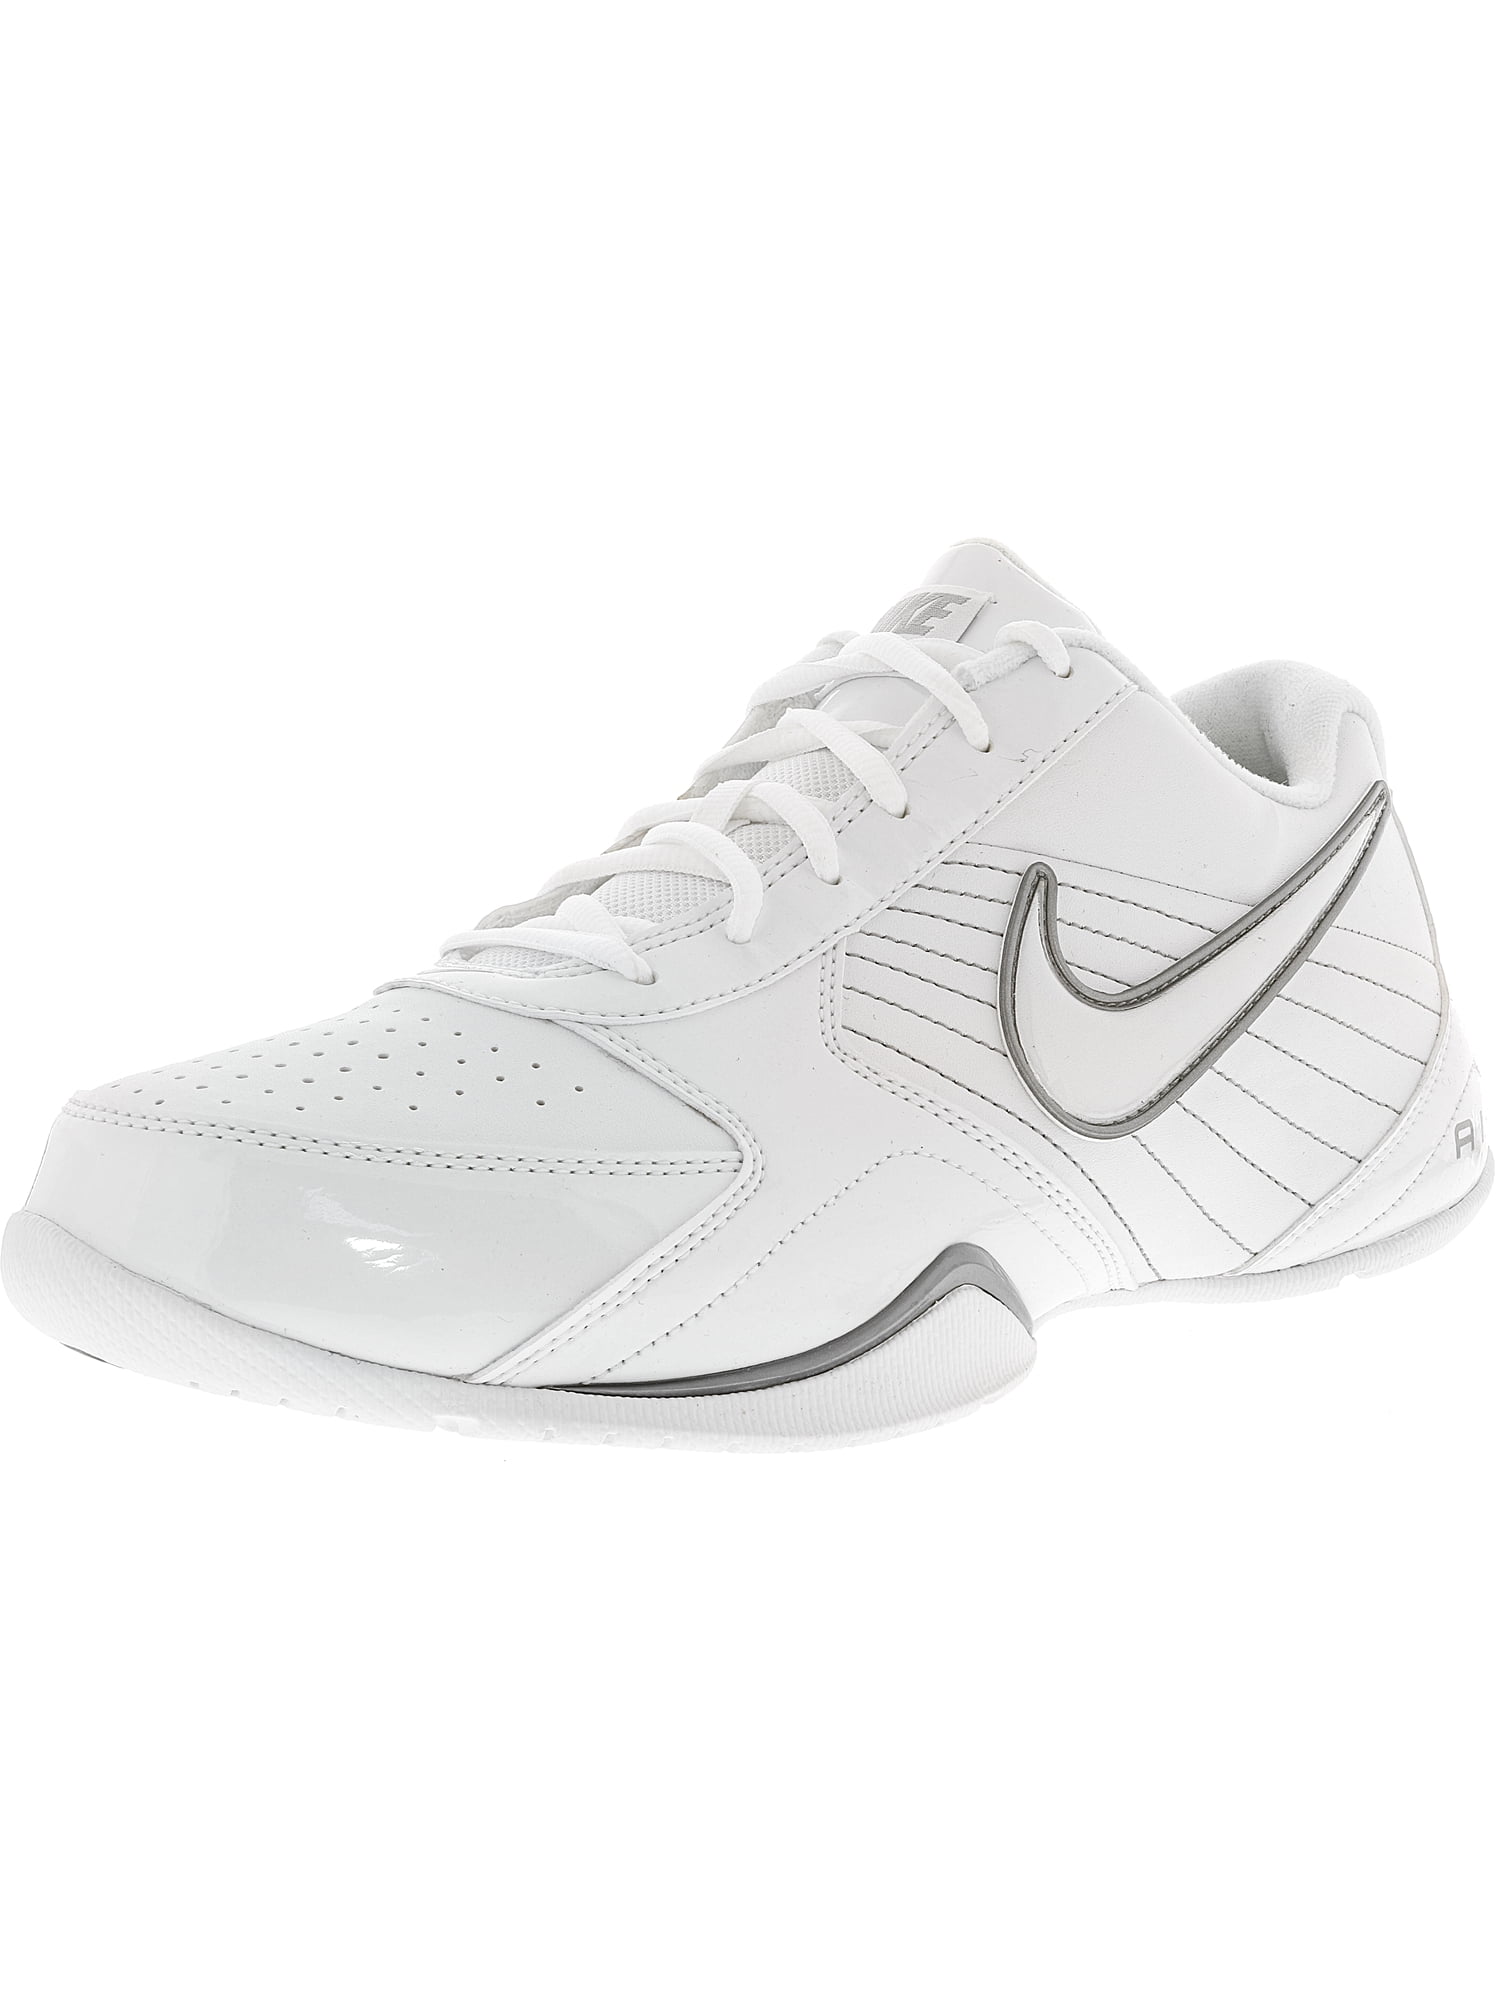 mosaico raro Documento Nike Men's Air Baseline Low White / Top Leather Walking Shoe - 9.5M -  Walmart.com